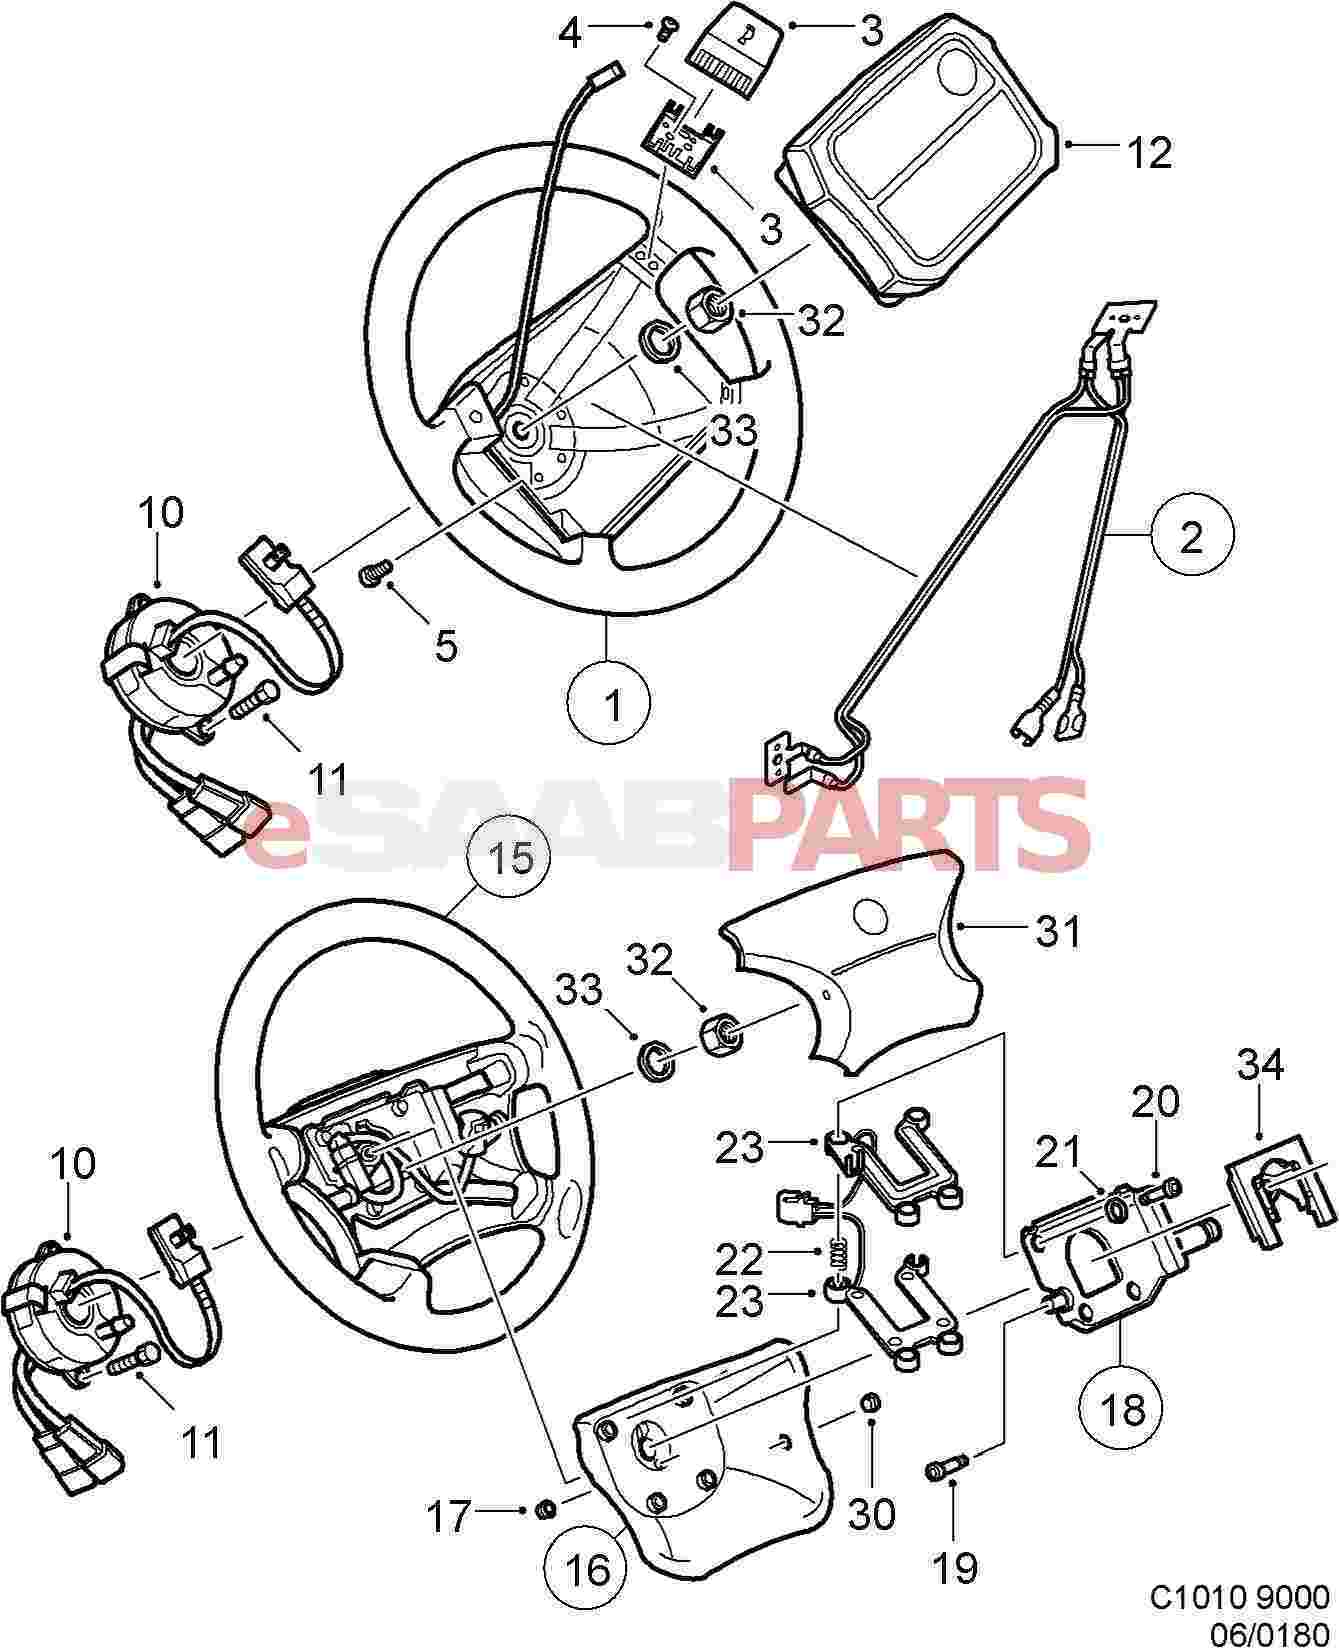 4847463] SAAB Steering Wheel - Saab Parts from eSaabParts.com